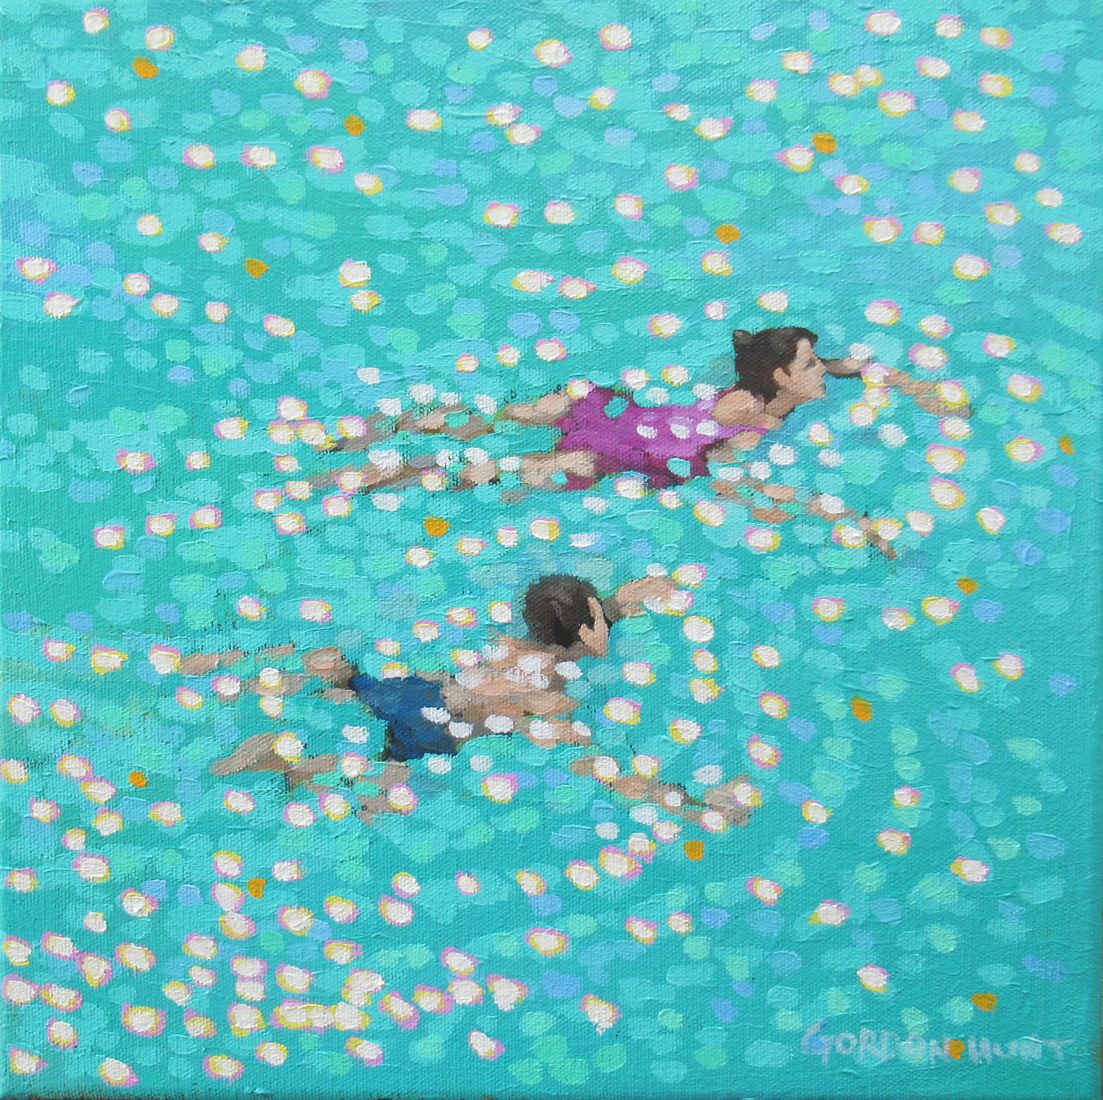 Swim study - turquoise by Gordon Hunt